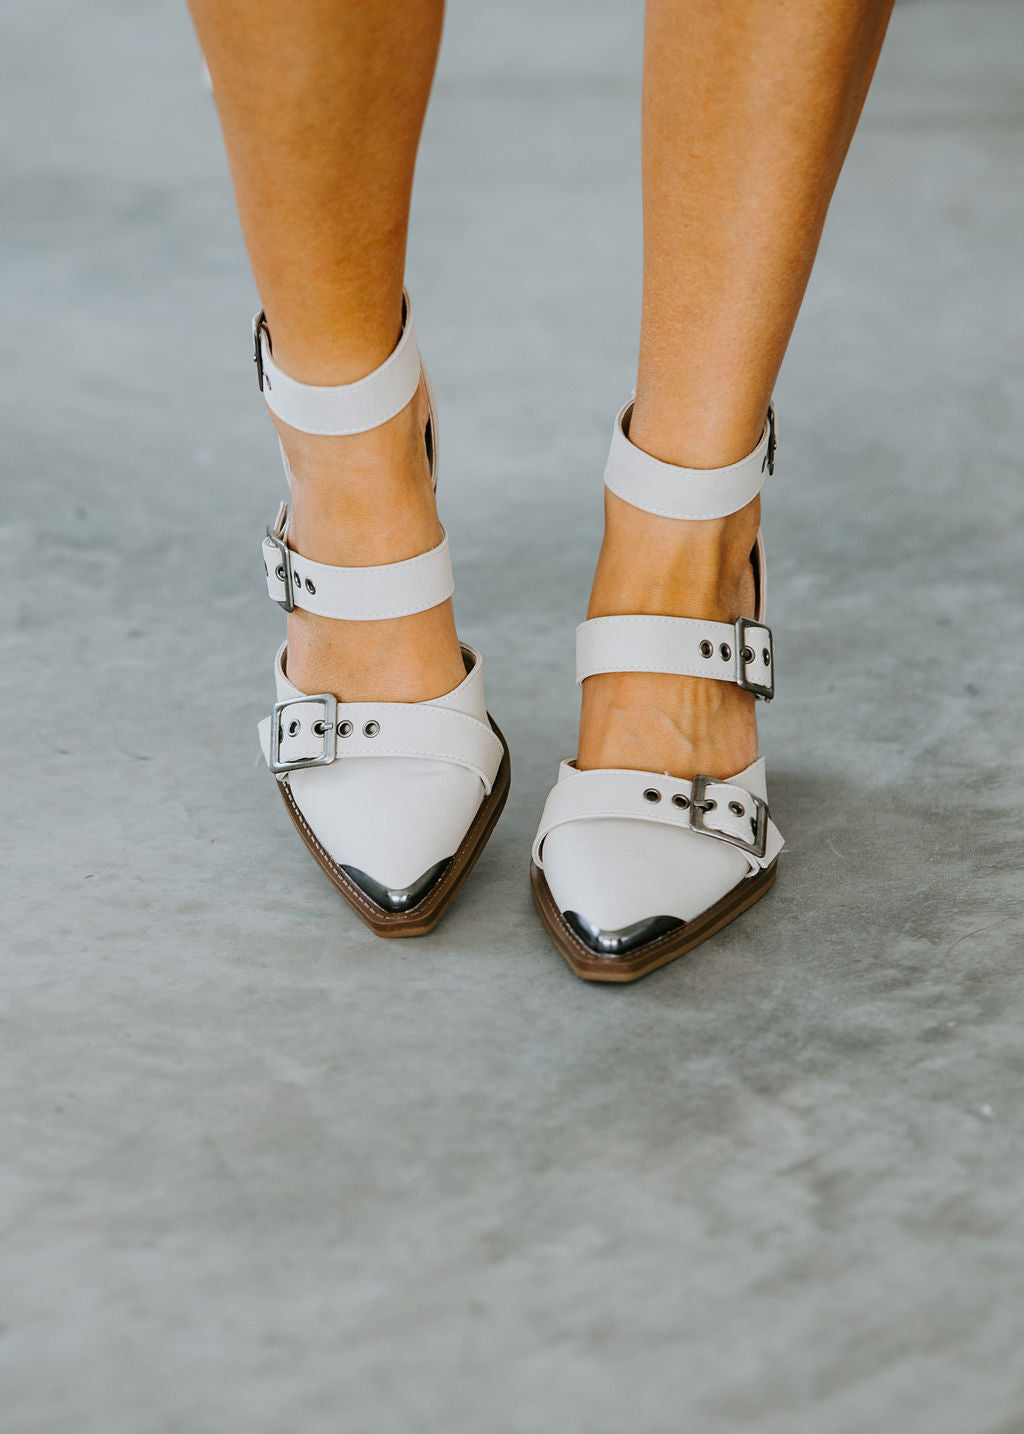 Irina Buckle Heels by Very G